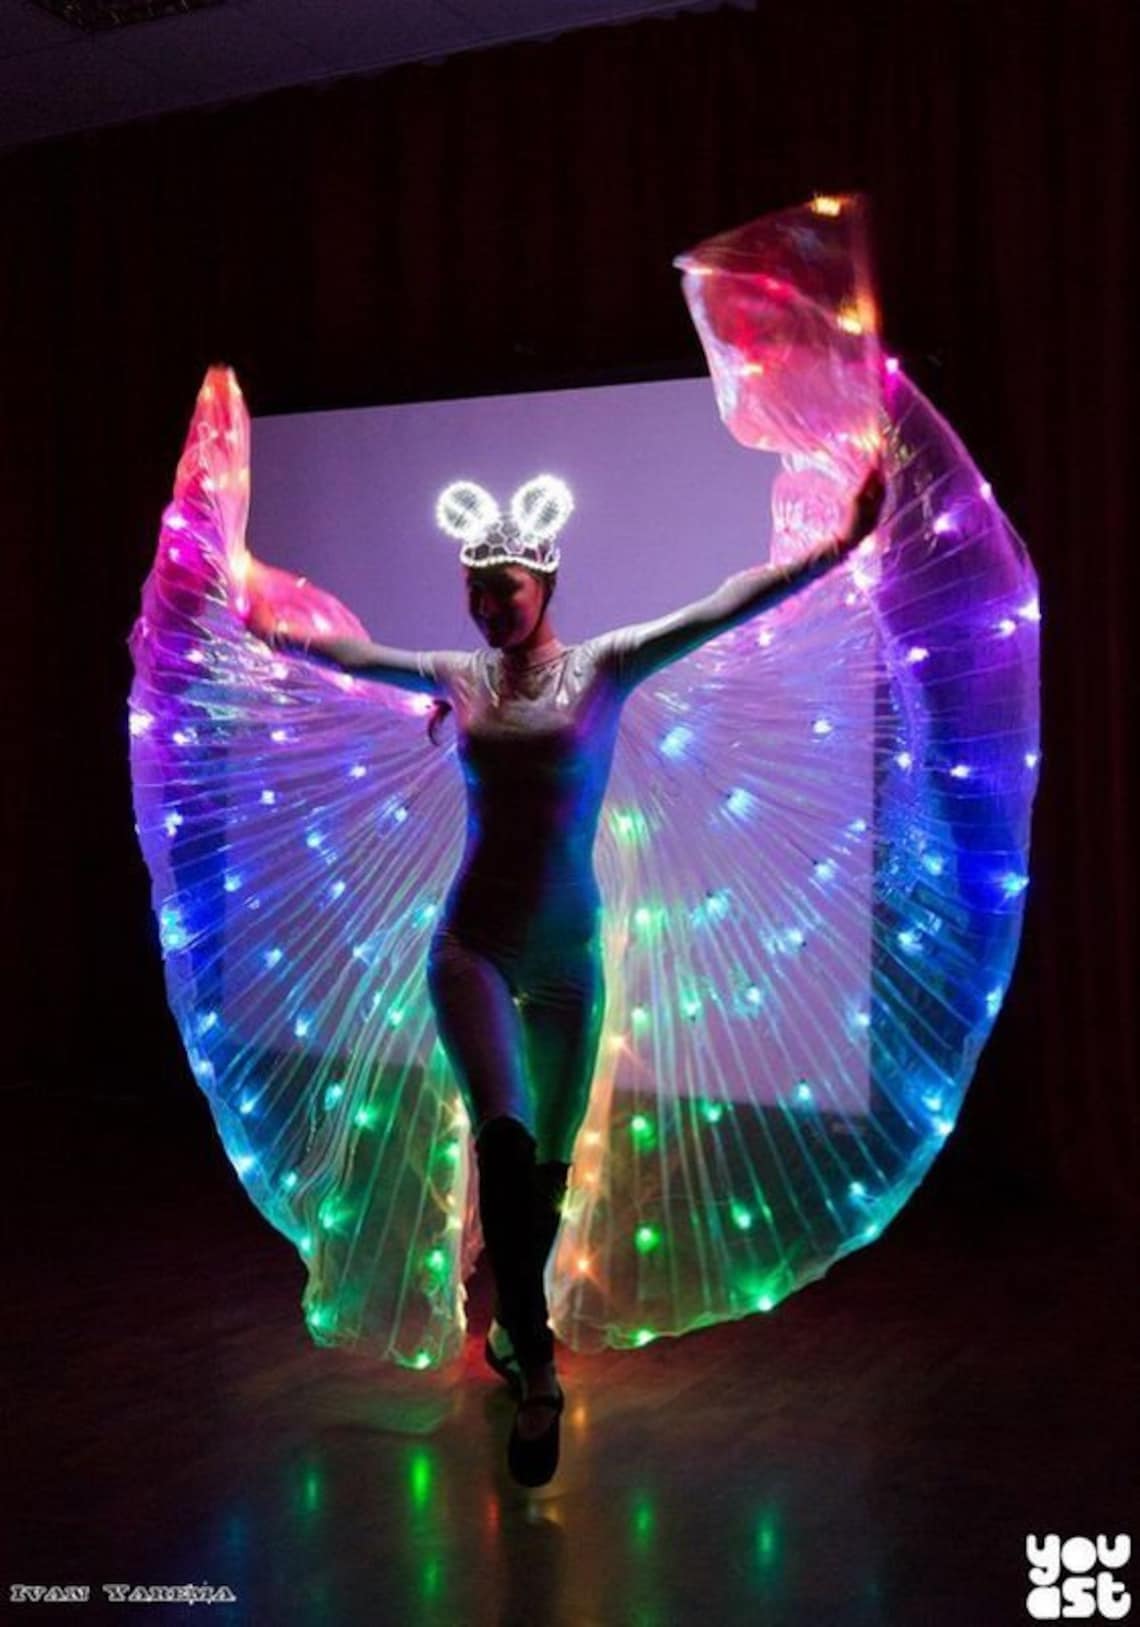 Smart LED Bellydance Rainbow wings 164LEDs _B10 | Etsy